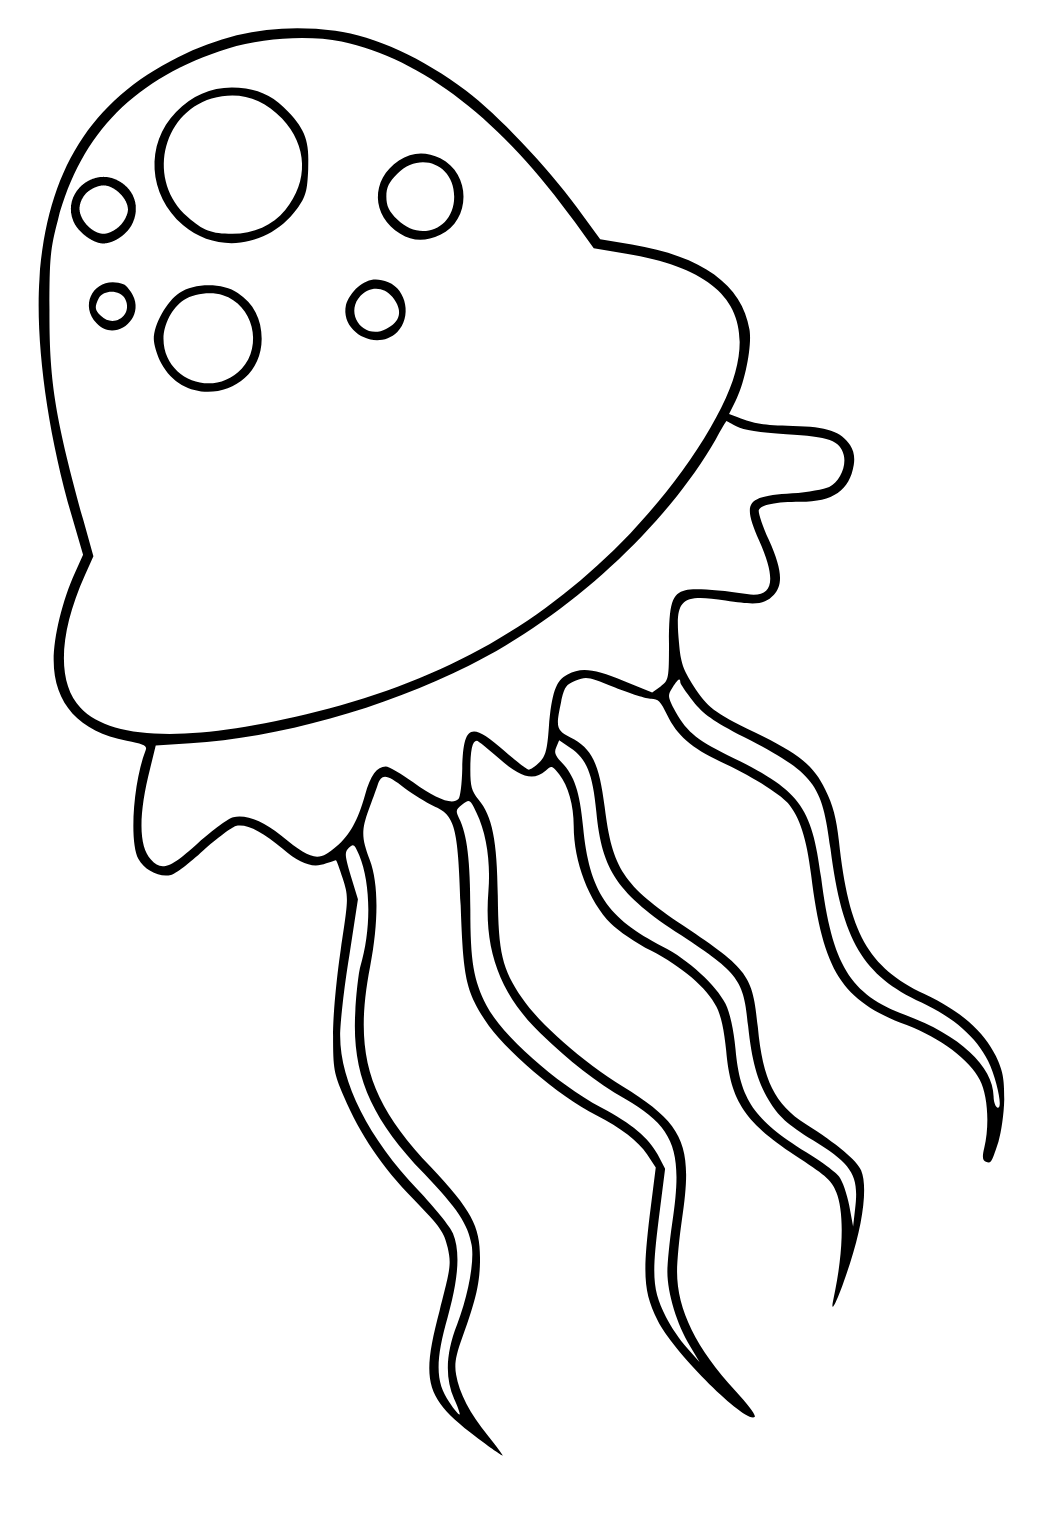 Medúza